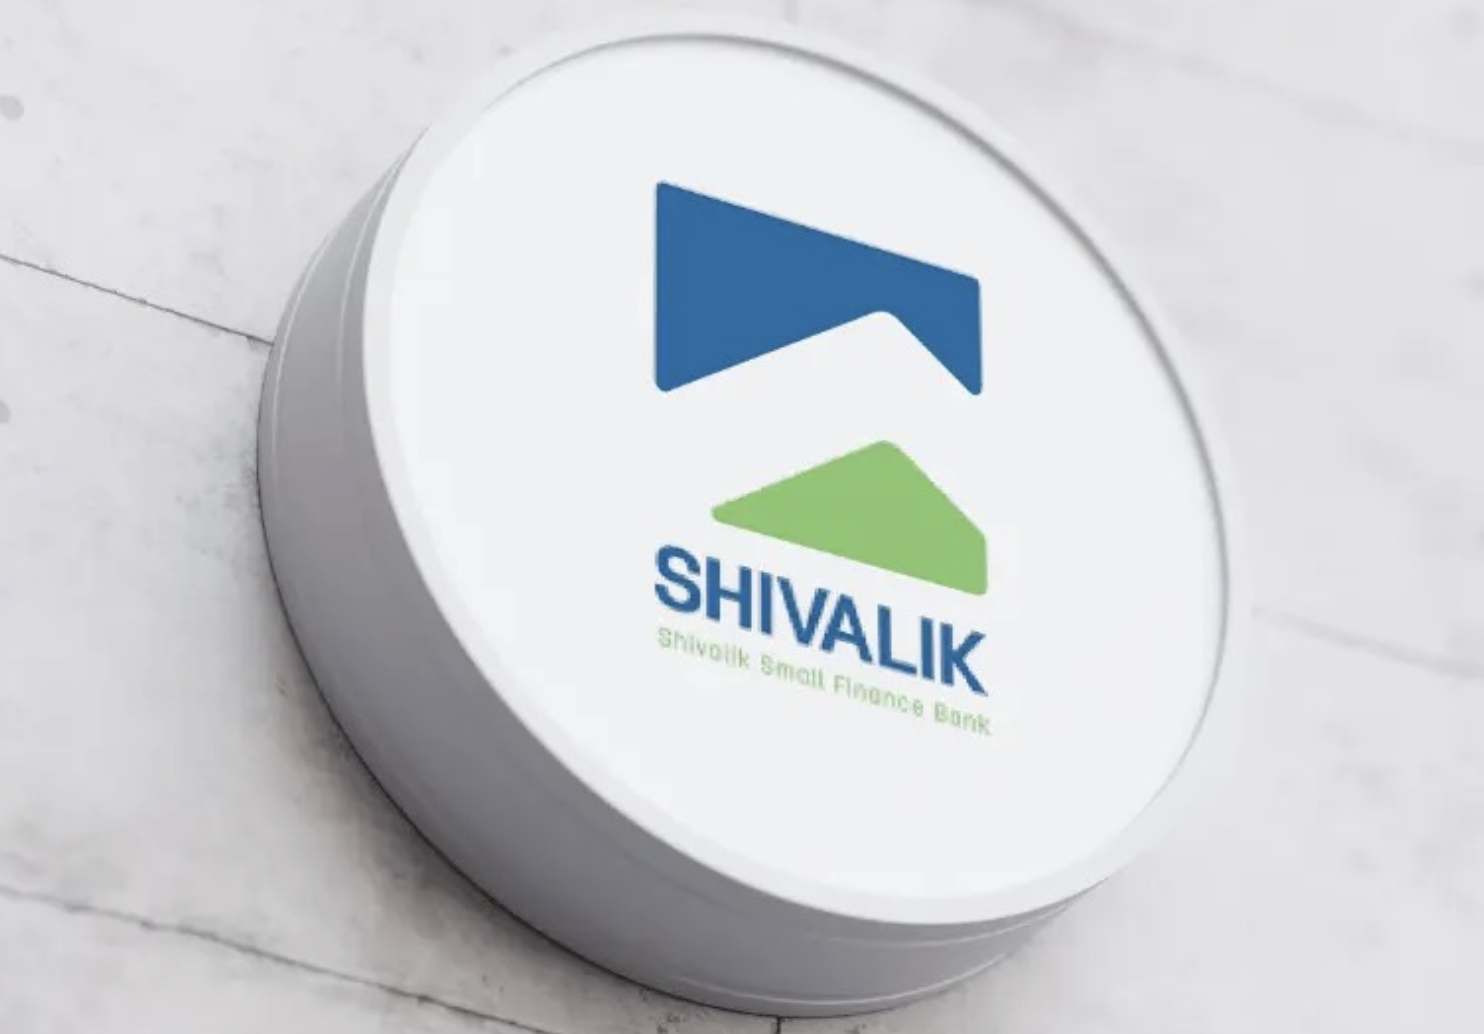 Arya.ag announces partnership with Shivalik Small Finance Bank to drive farmers' financial inclusion